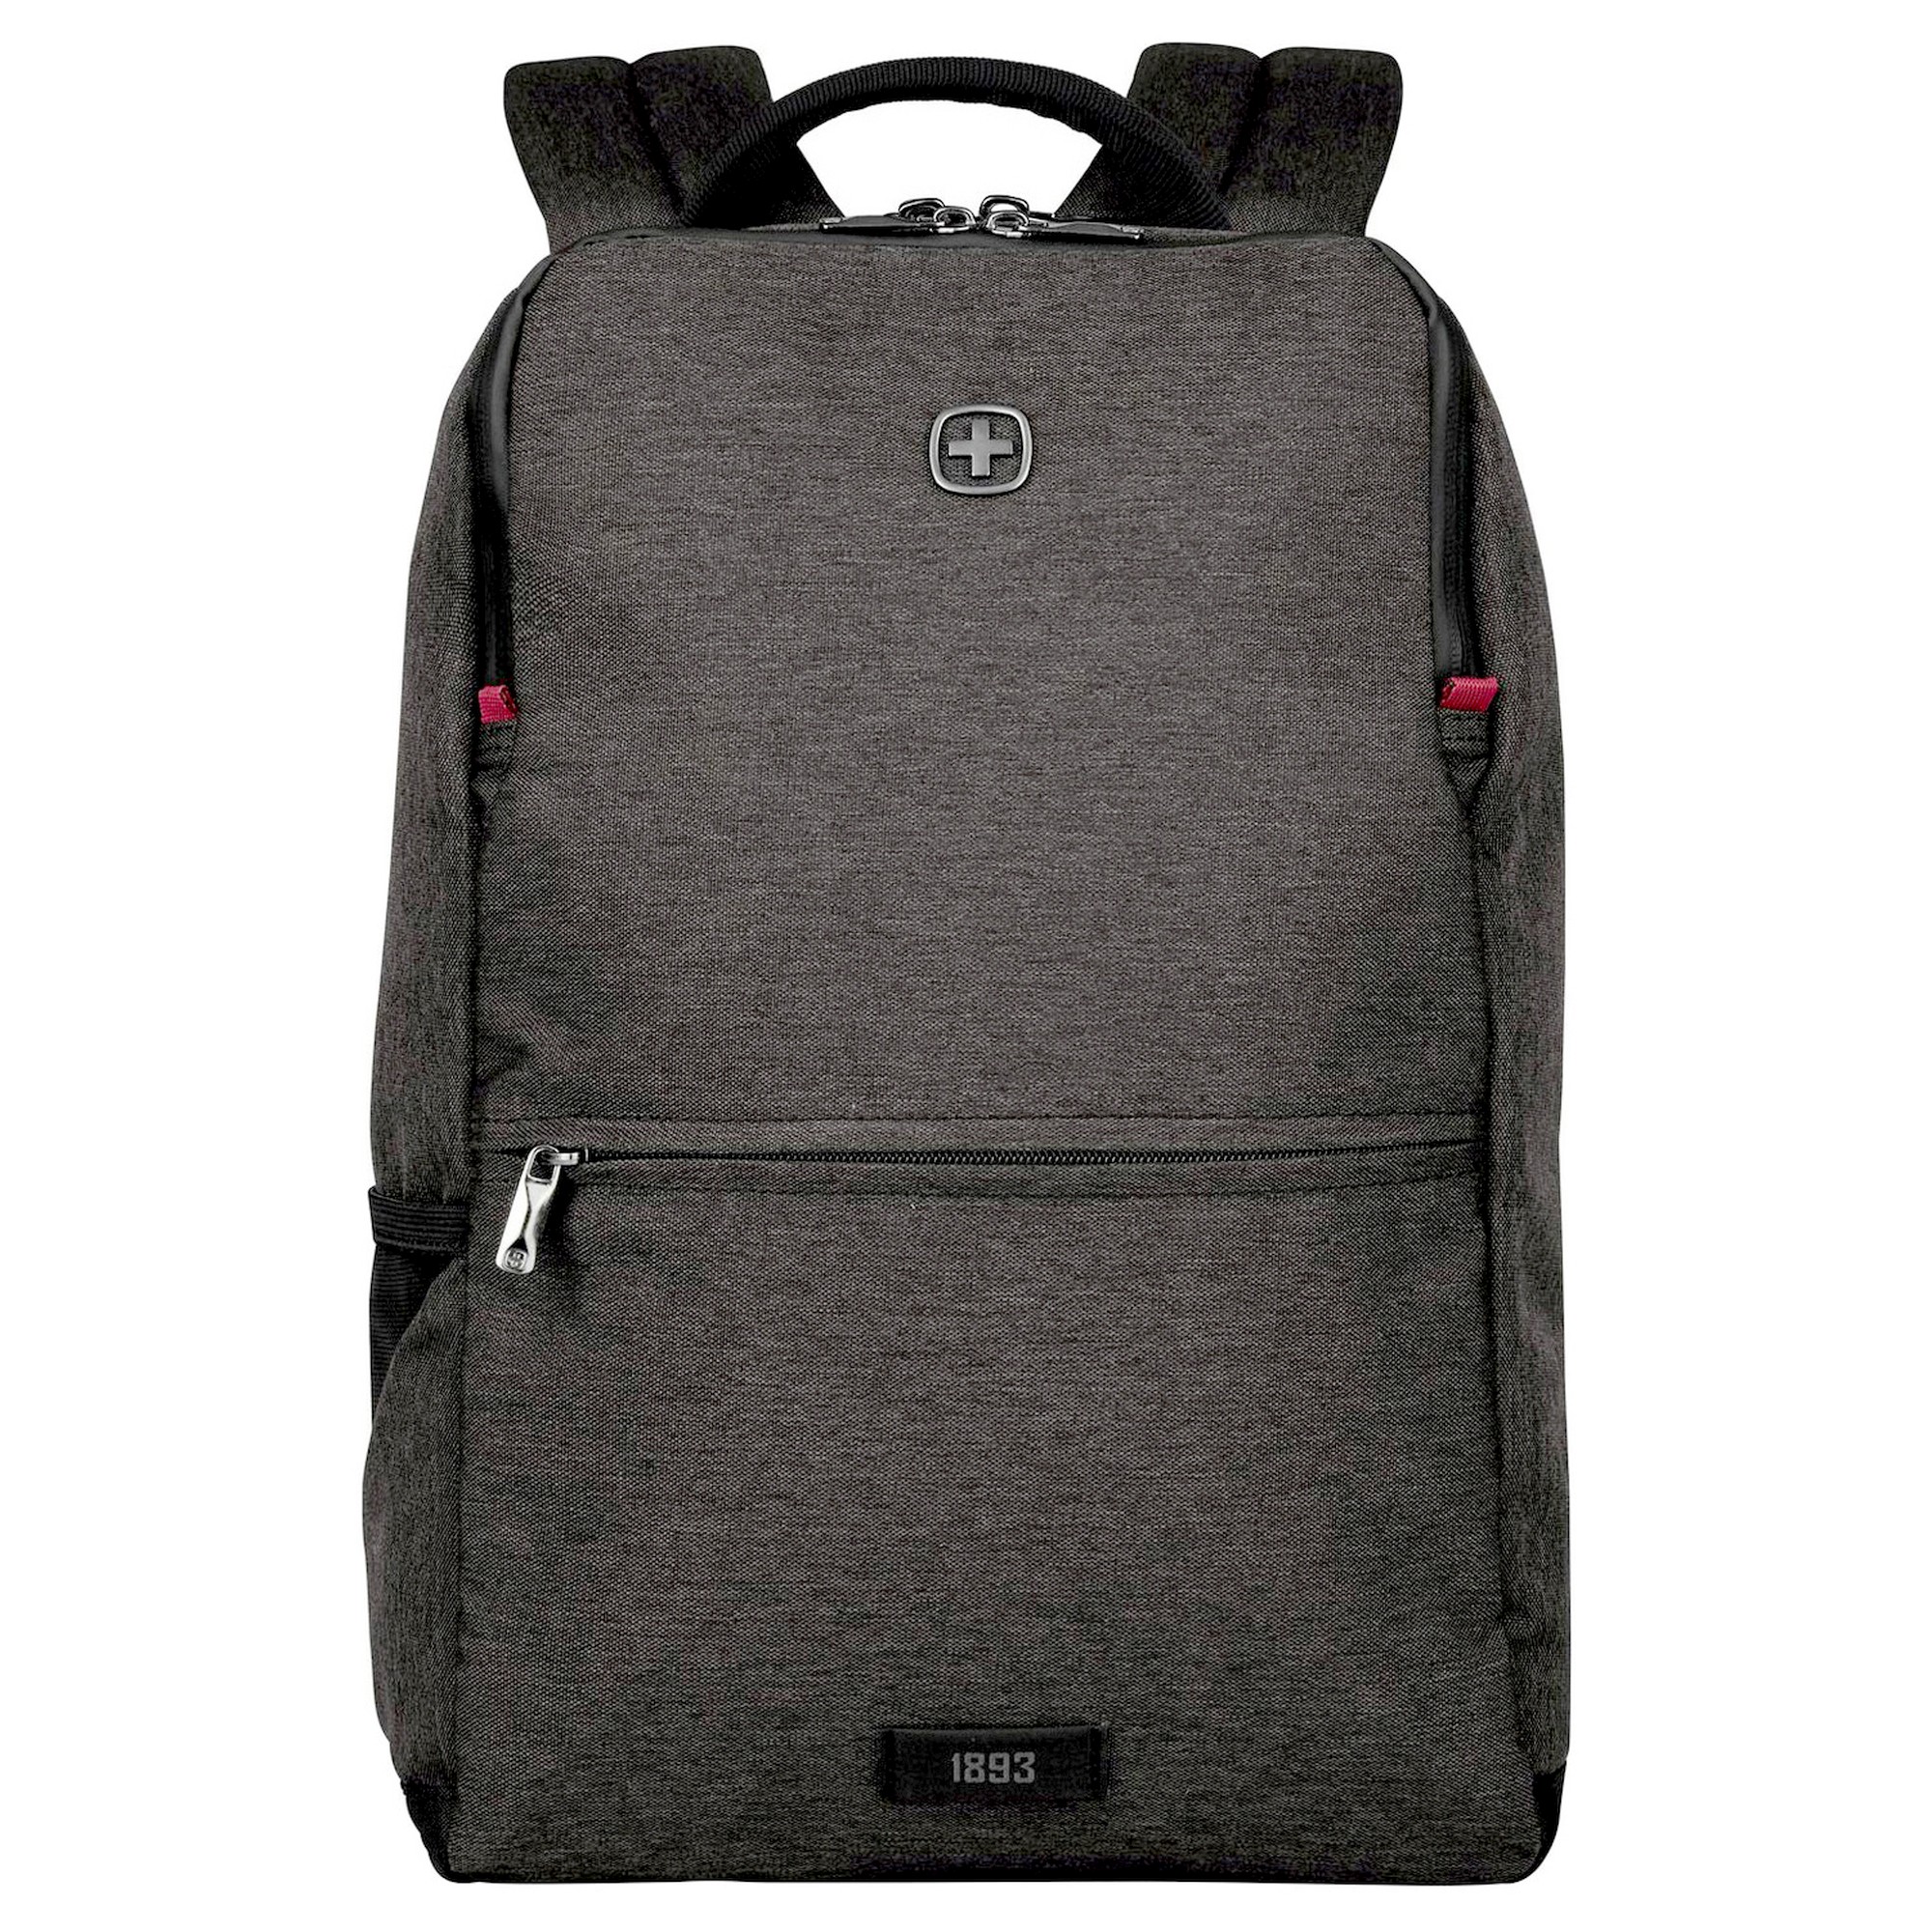 Сумка для ноутбука Wenger MX Reload 14 42 cm, цвет heather grey рюкзак wenger reload 14 42 cm laptopfach черный